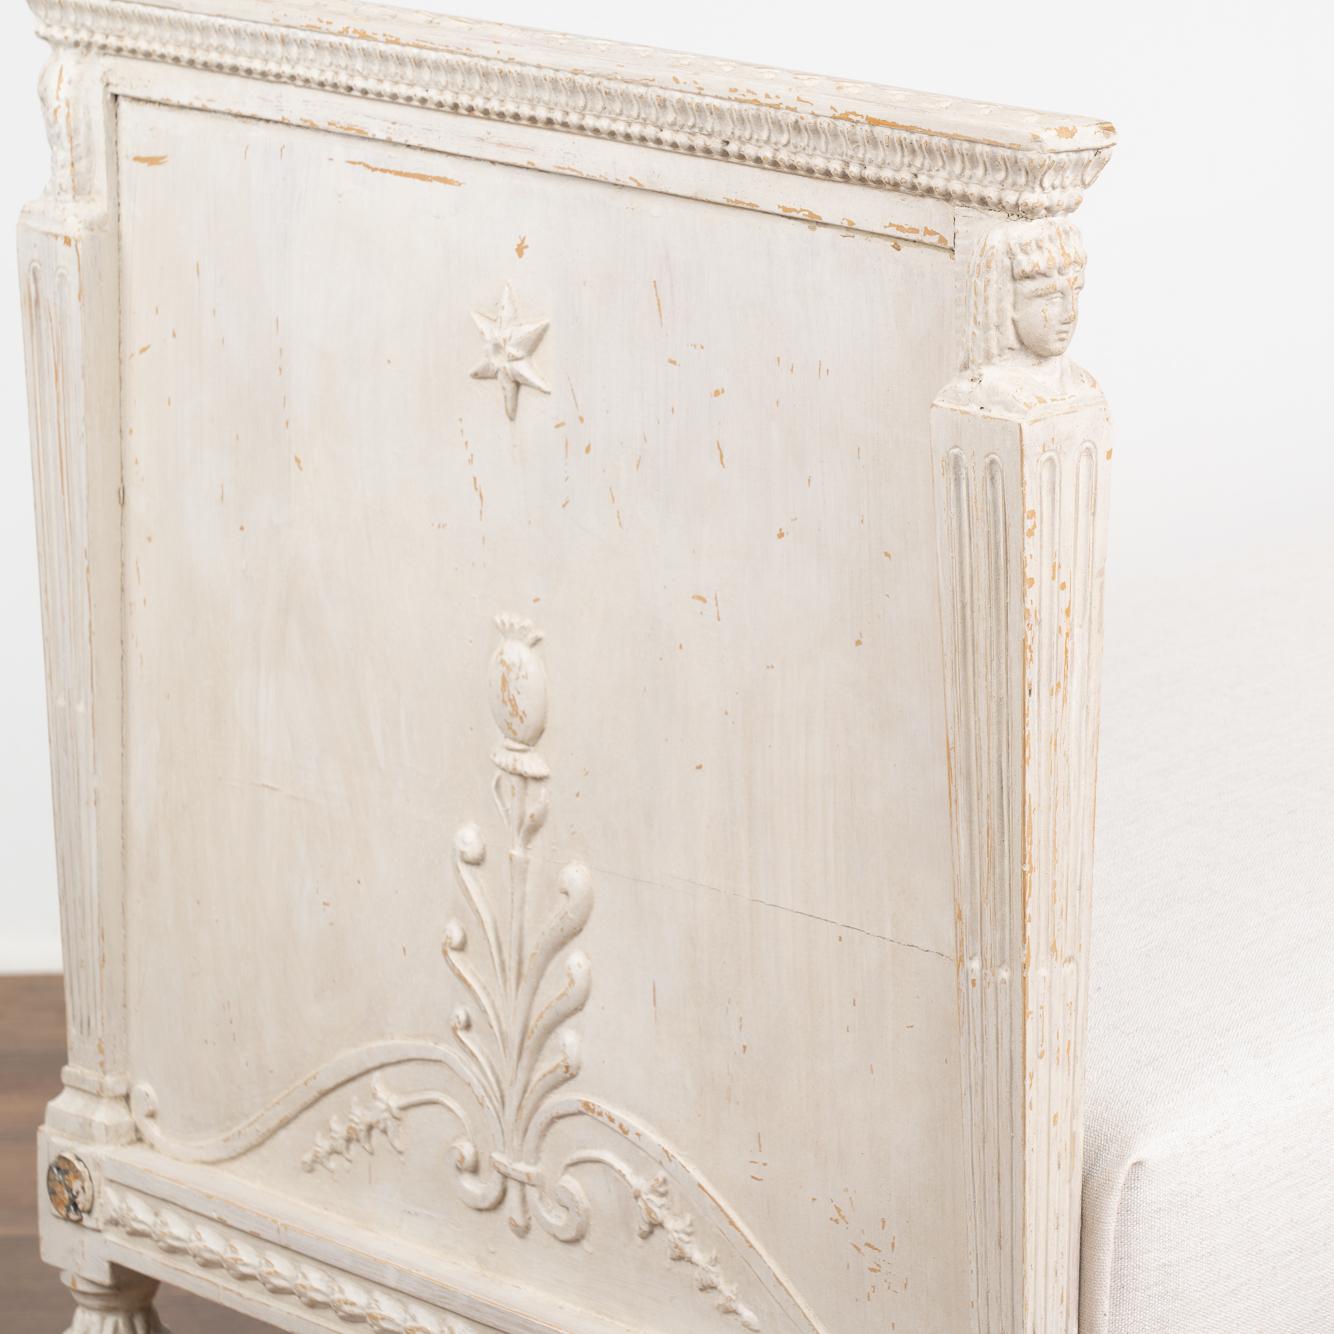 Linen Antique Swedish Gustavian White Painted Settee Sofa Bench, circa 1820-40